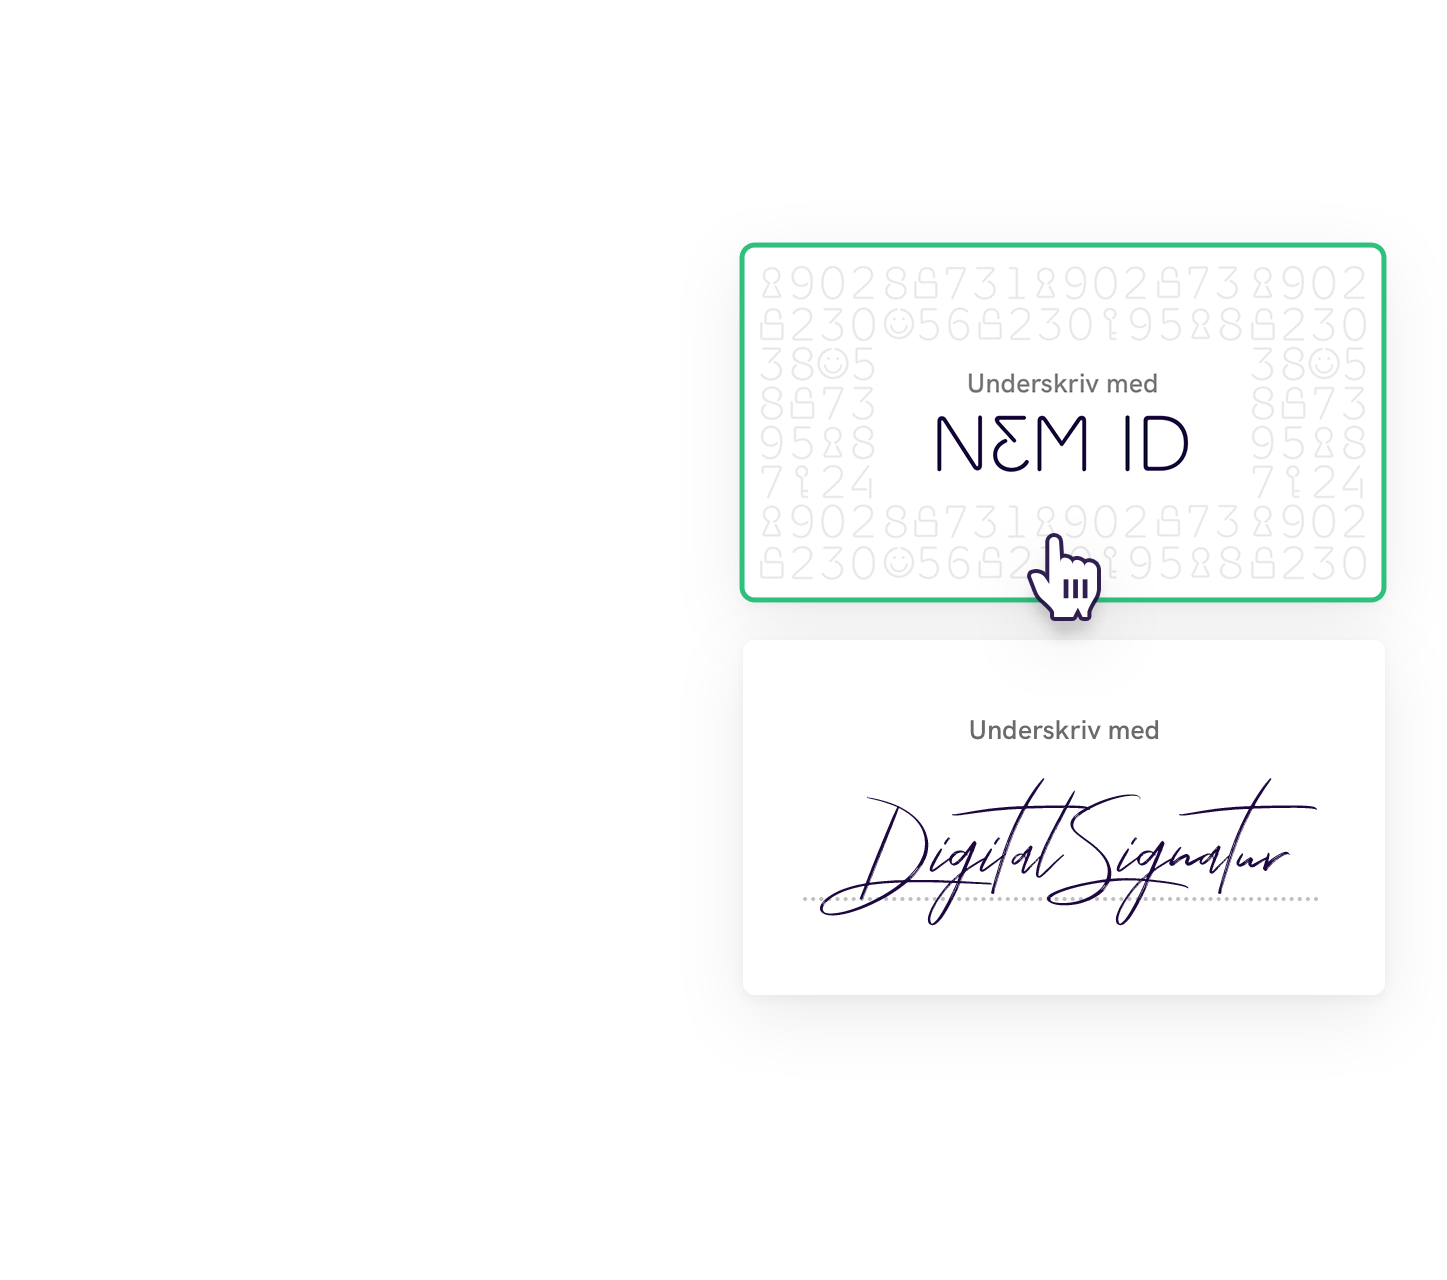 Underskriv nemt, hurtigt & digitalt med NemID